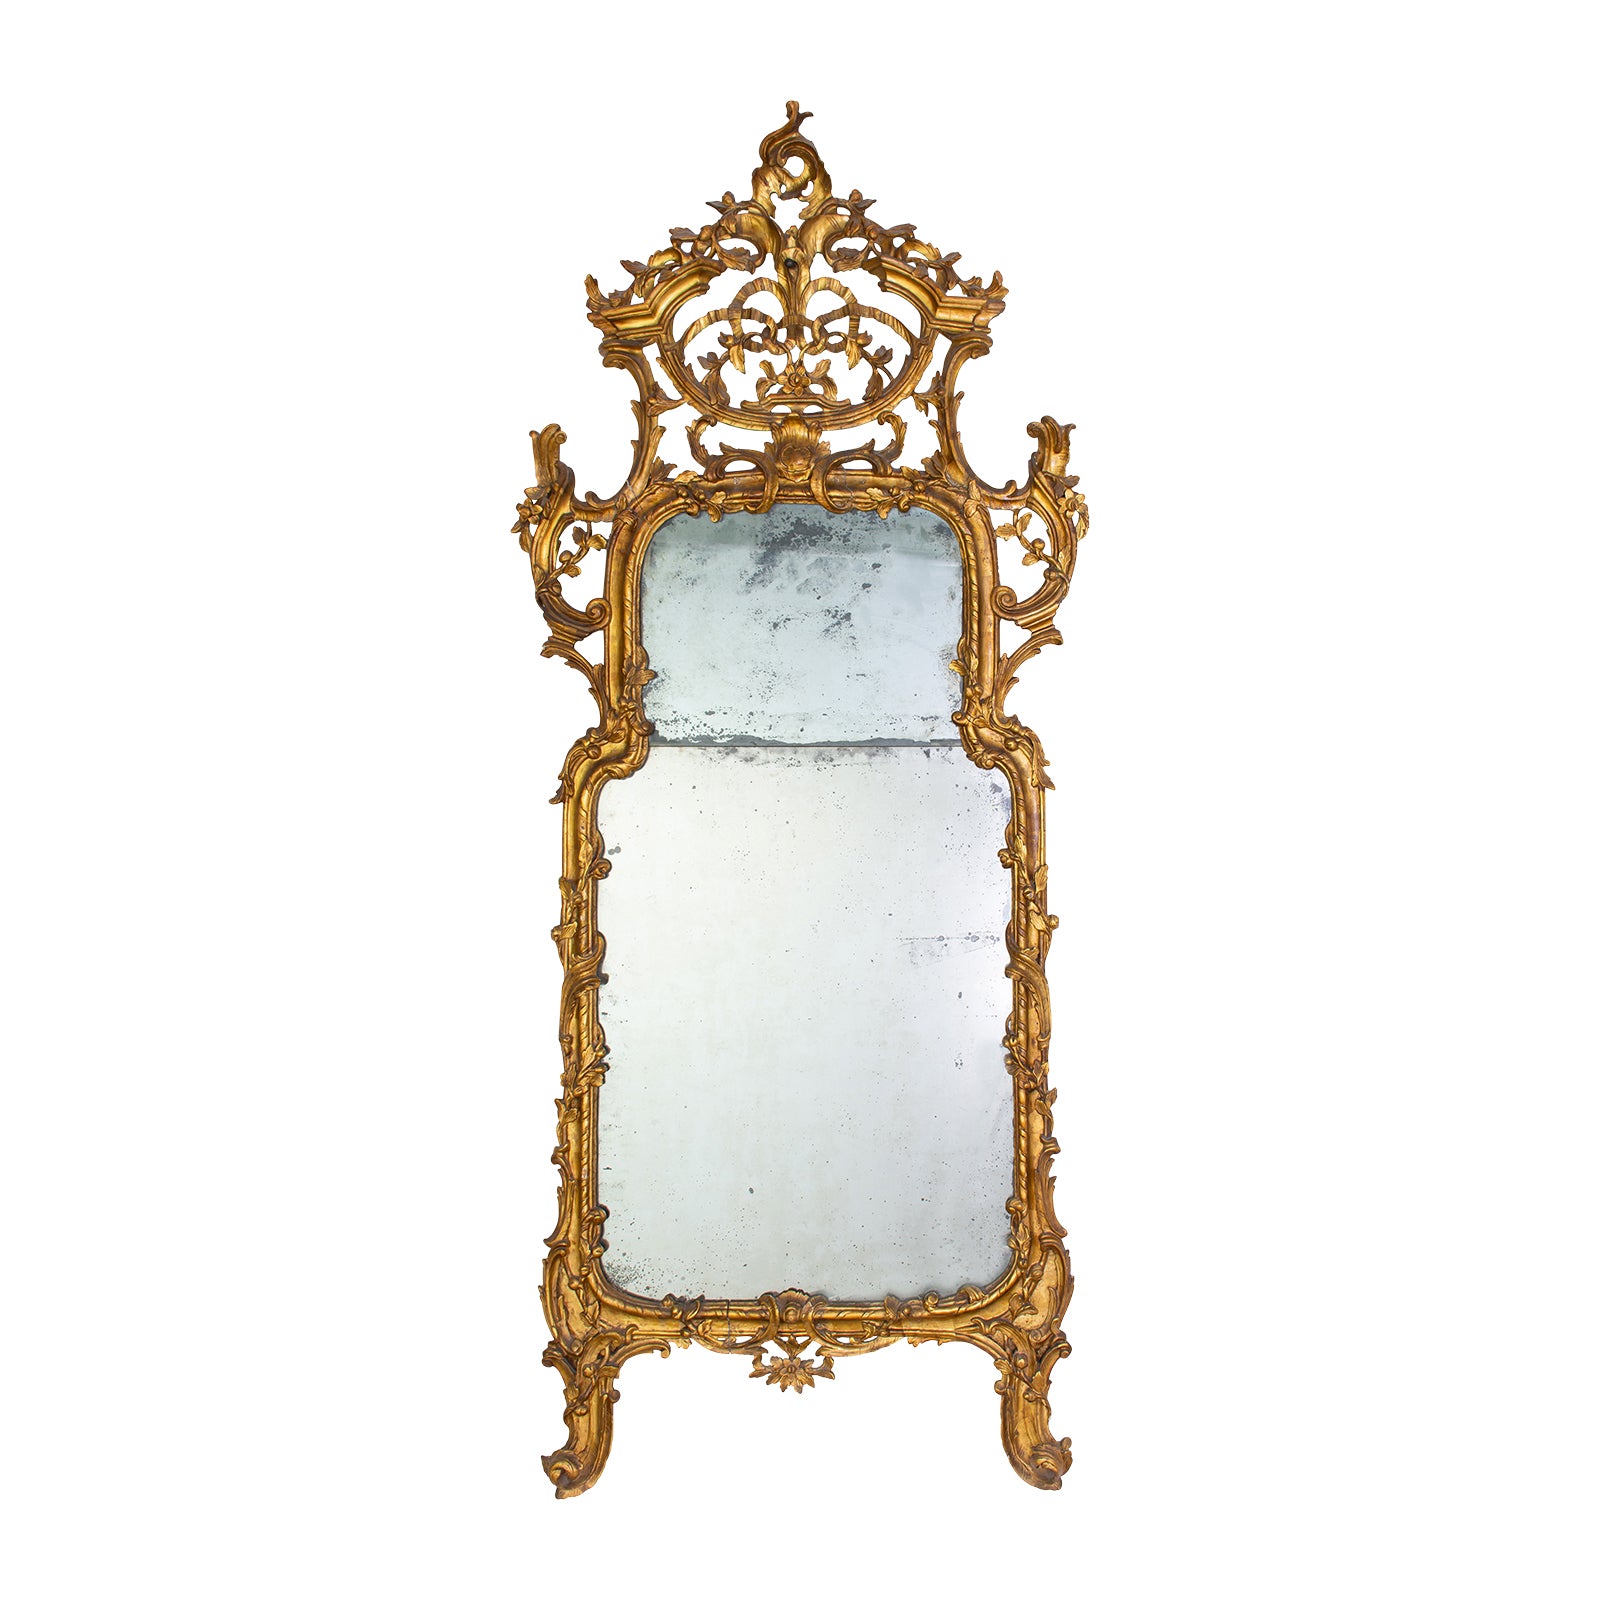 An Fine and Rare 18th-century Rococo Giltwood Floor Mirror,